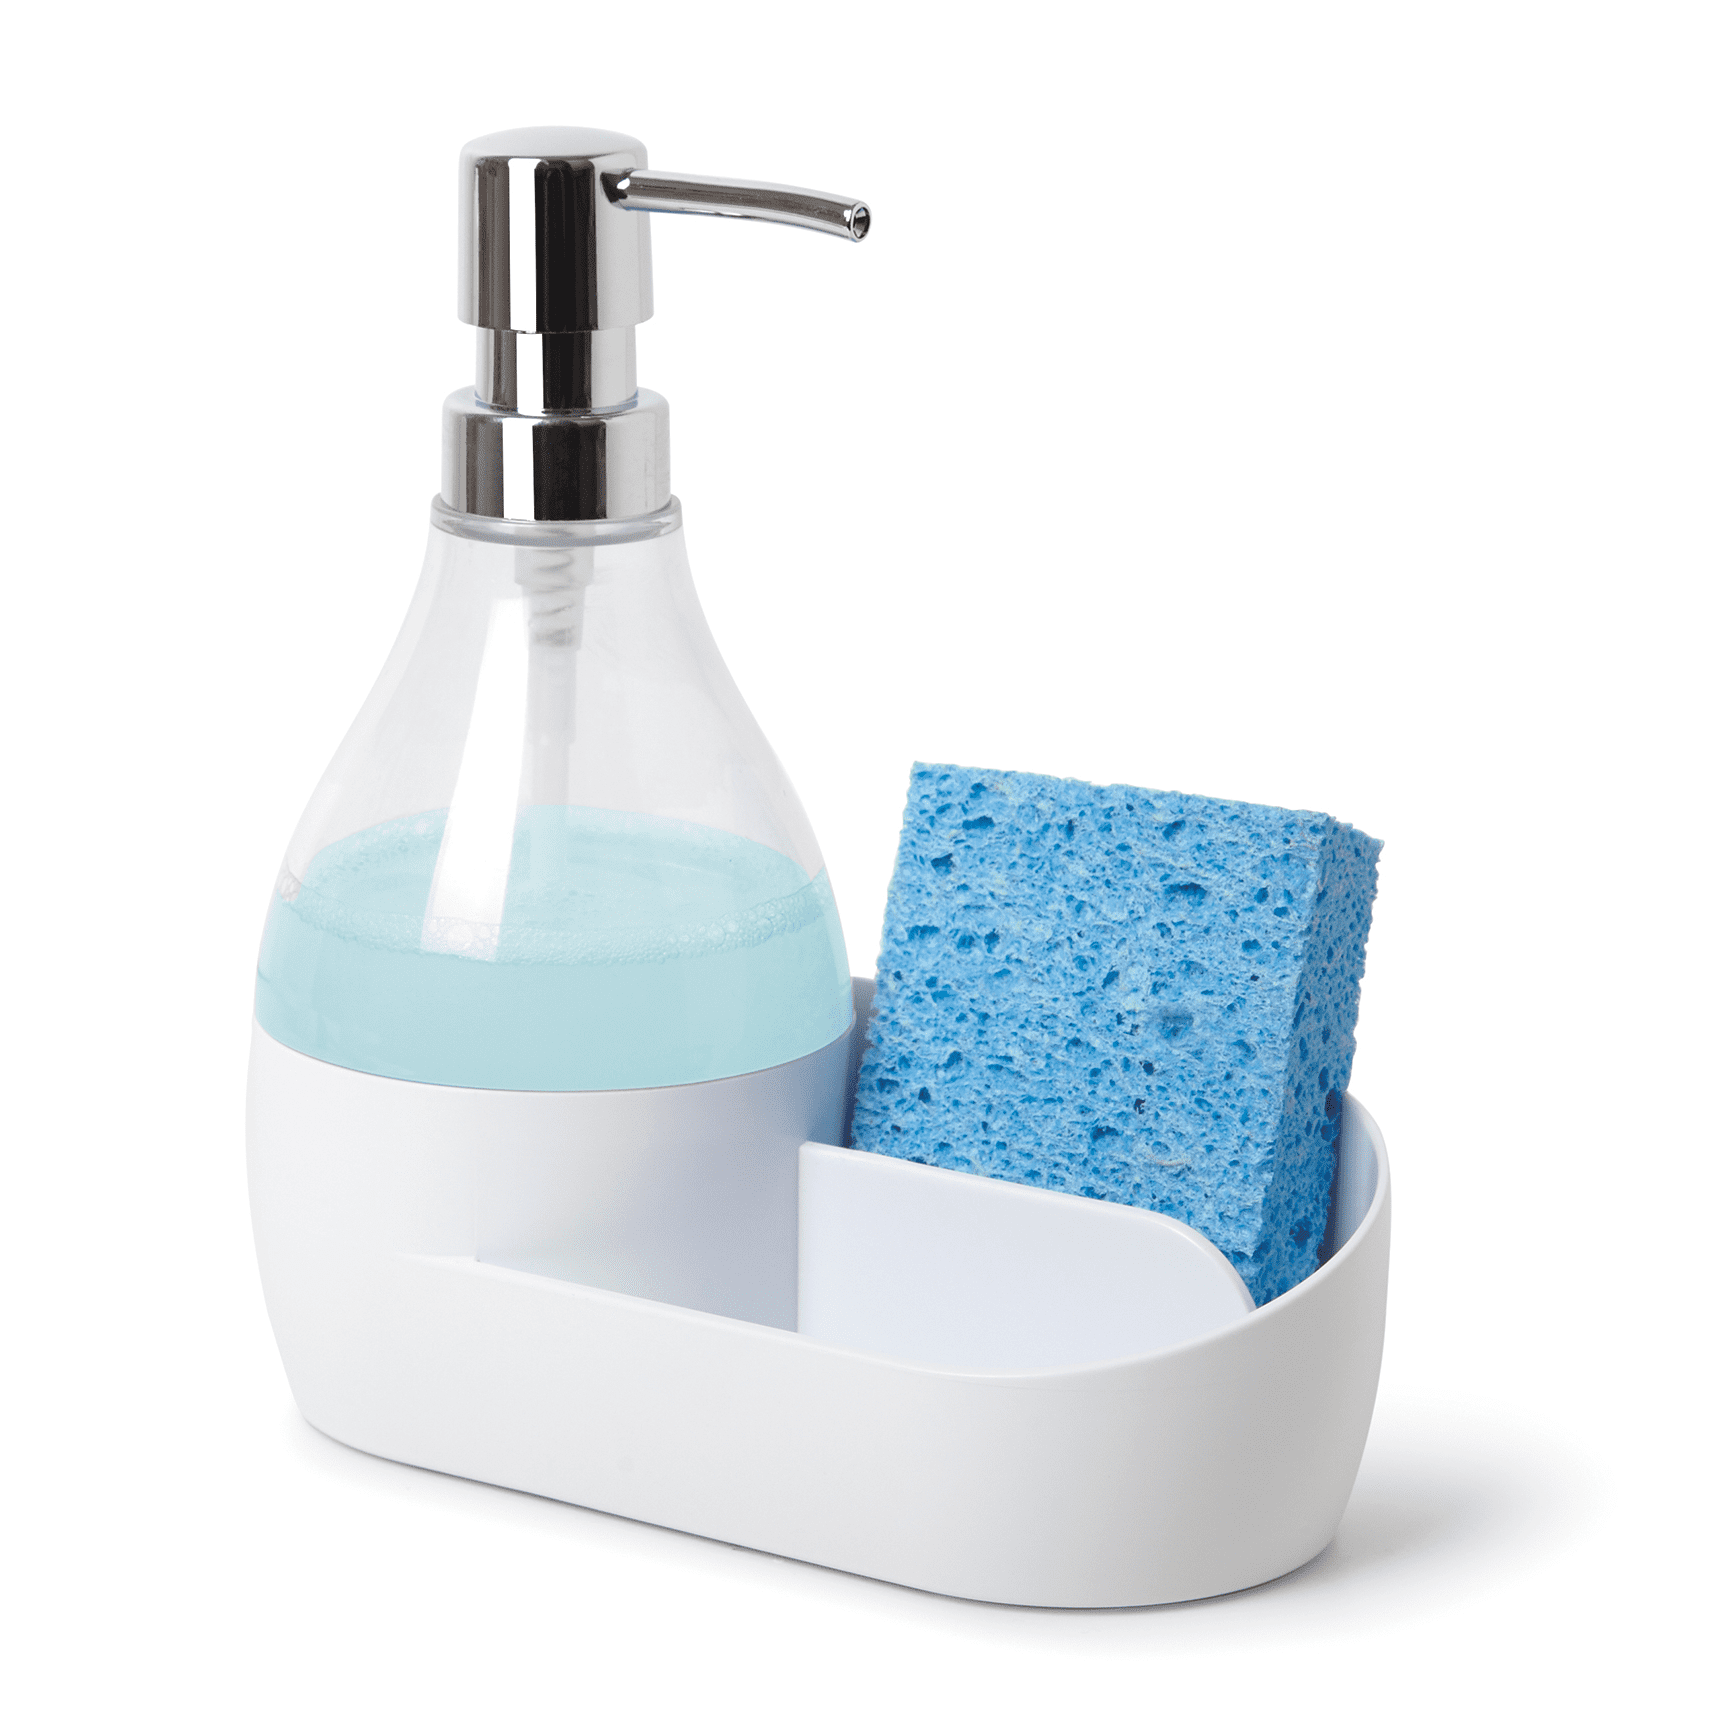 Mainstays Soap Dispenser With Sponge Pouch 